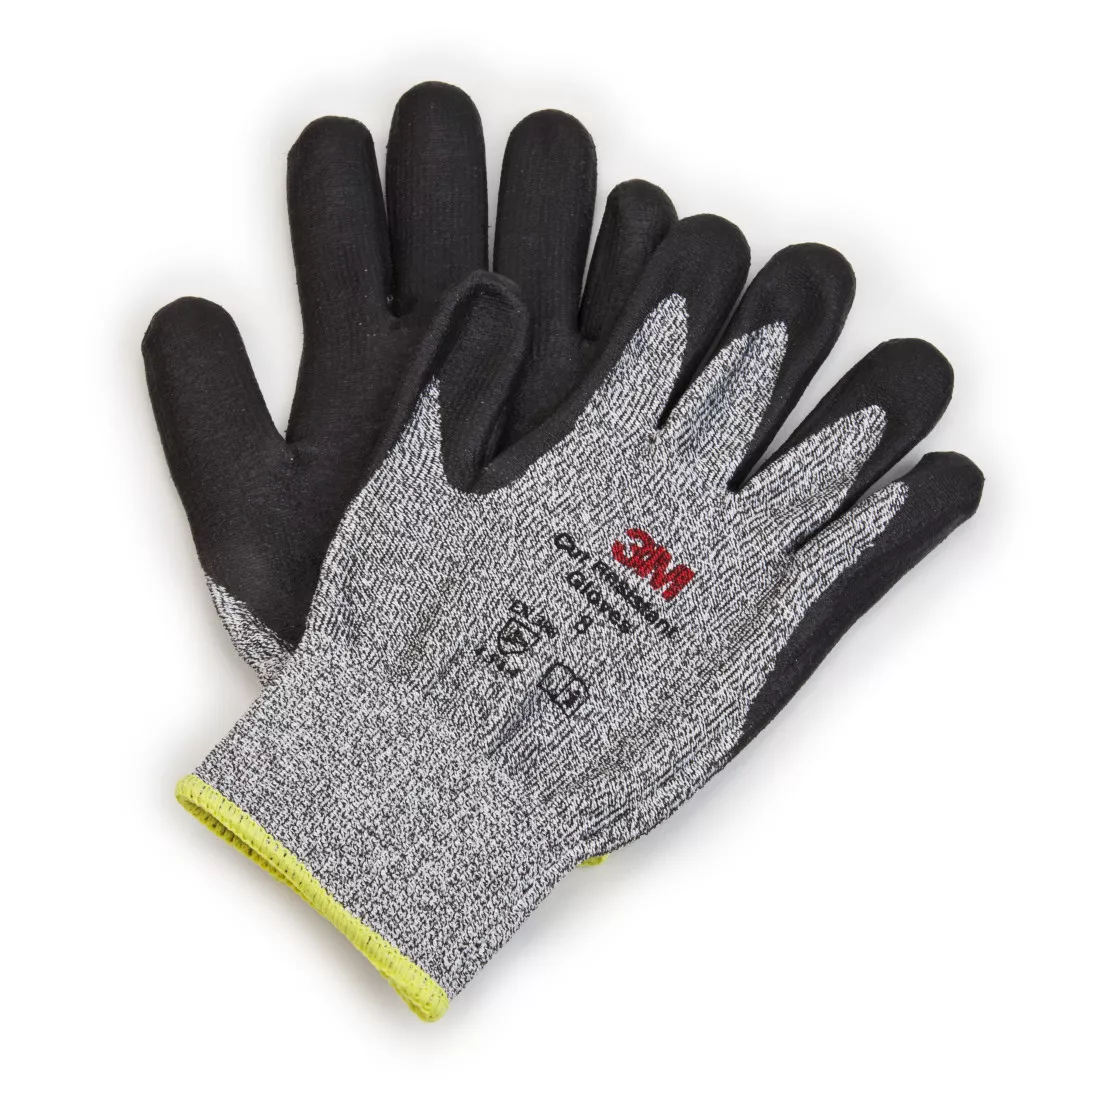 3M™ Comfort Grip Glove CGM-CR, Cut Resistant (ANSI 3), Size M, 72
Pair/Case